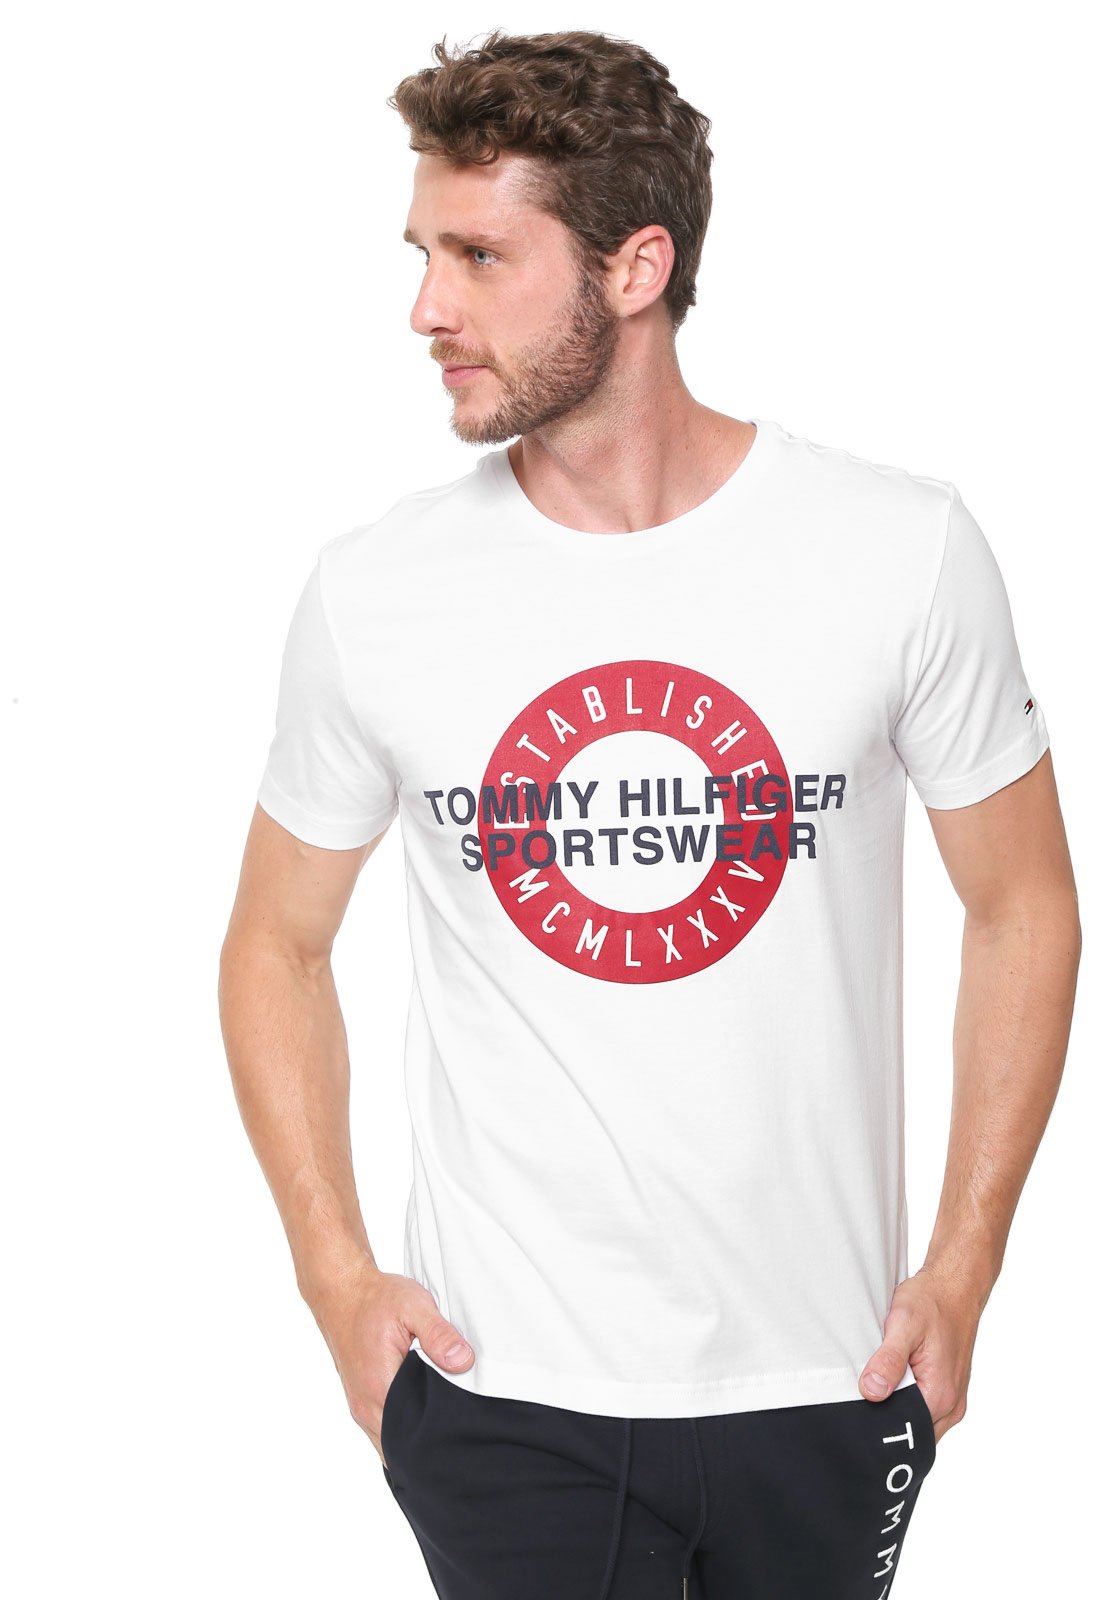 Camiseta Tommy Hilfiger estampada branca - Quadra 10